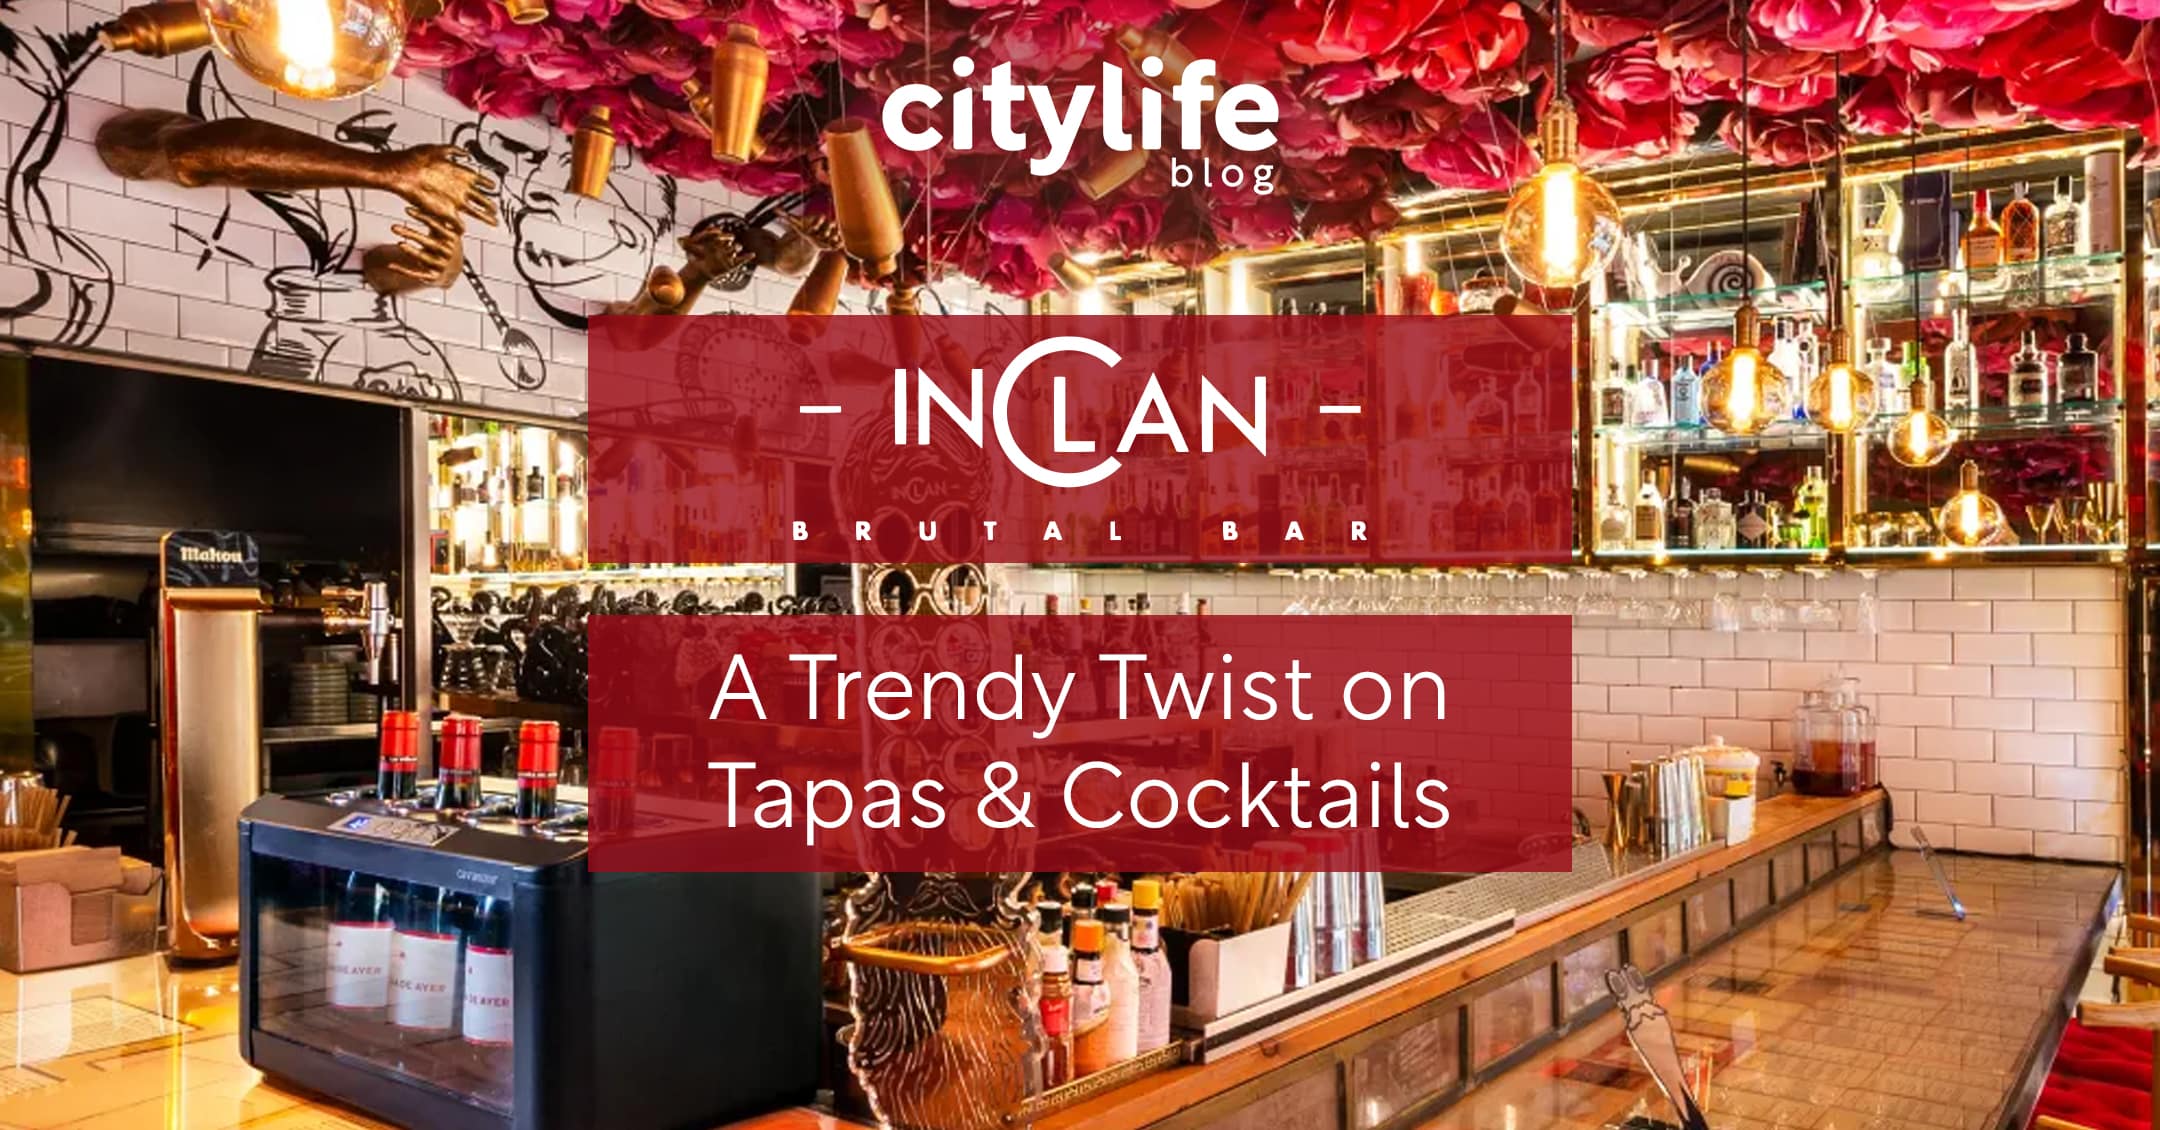 featured-image-inclan-brutal-bar-tapas-cocktails-citylife-madrid